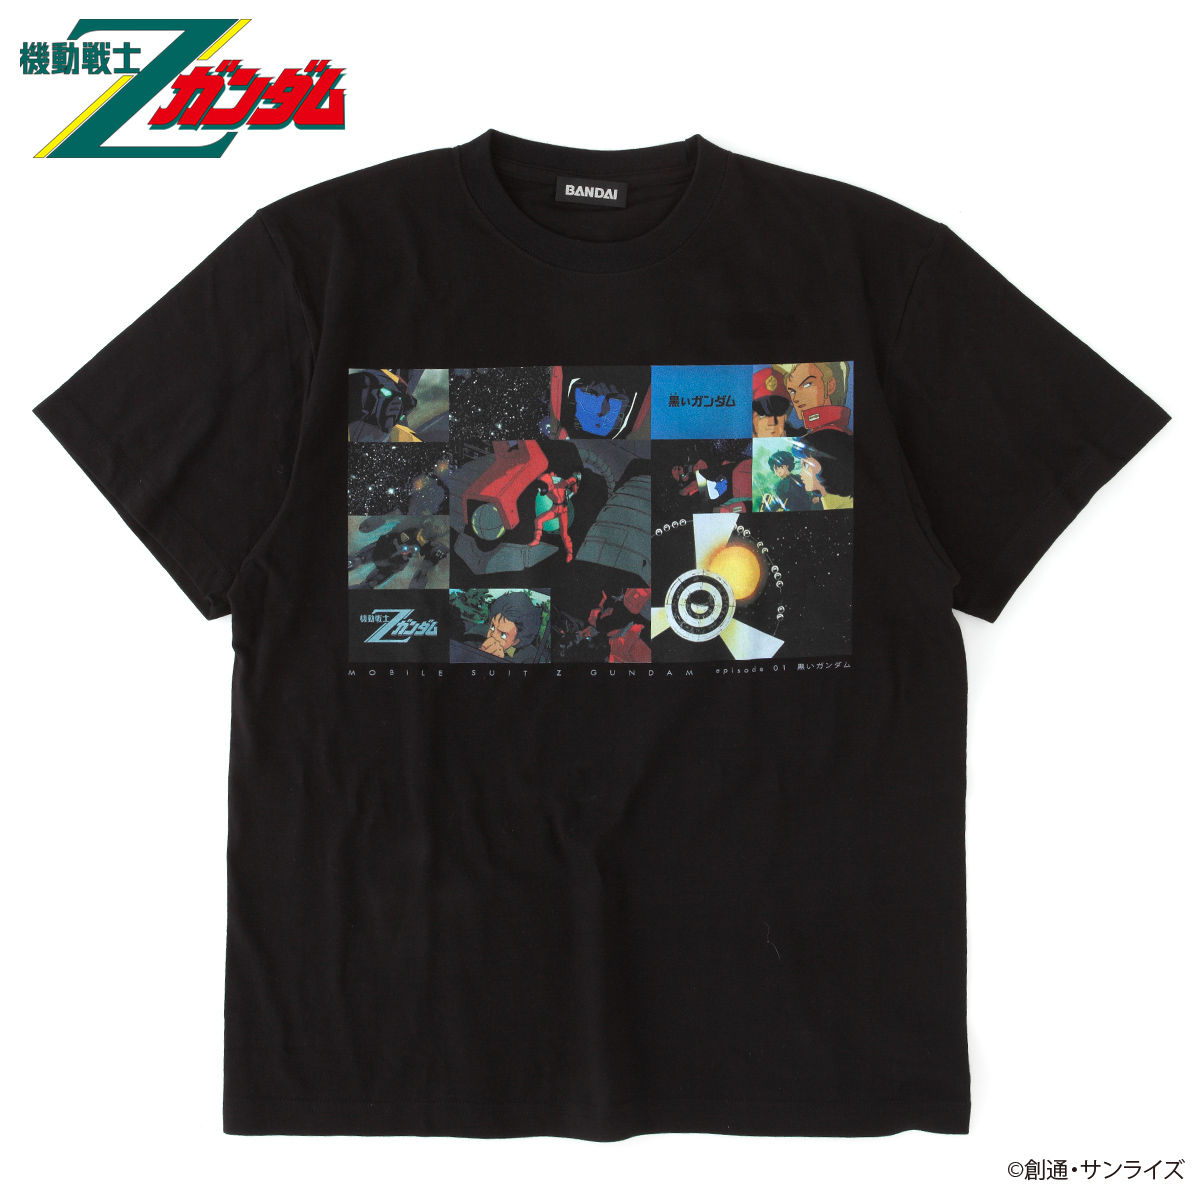 The Black Gundam T-shirt—Mobile Suit Zeta Gundam